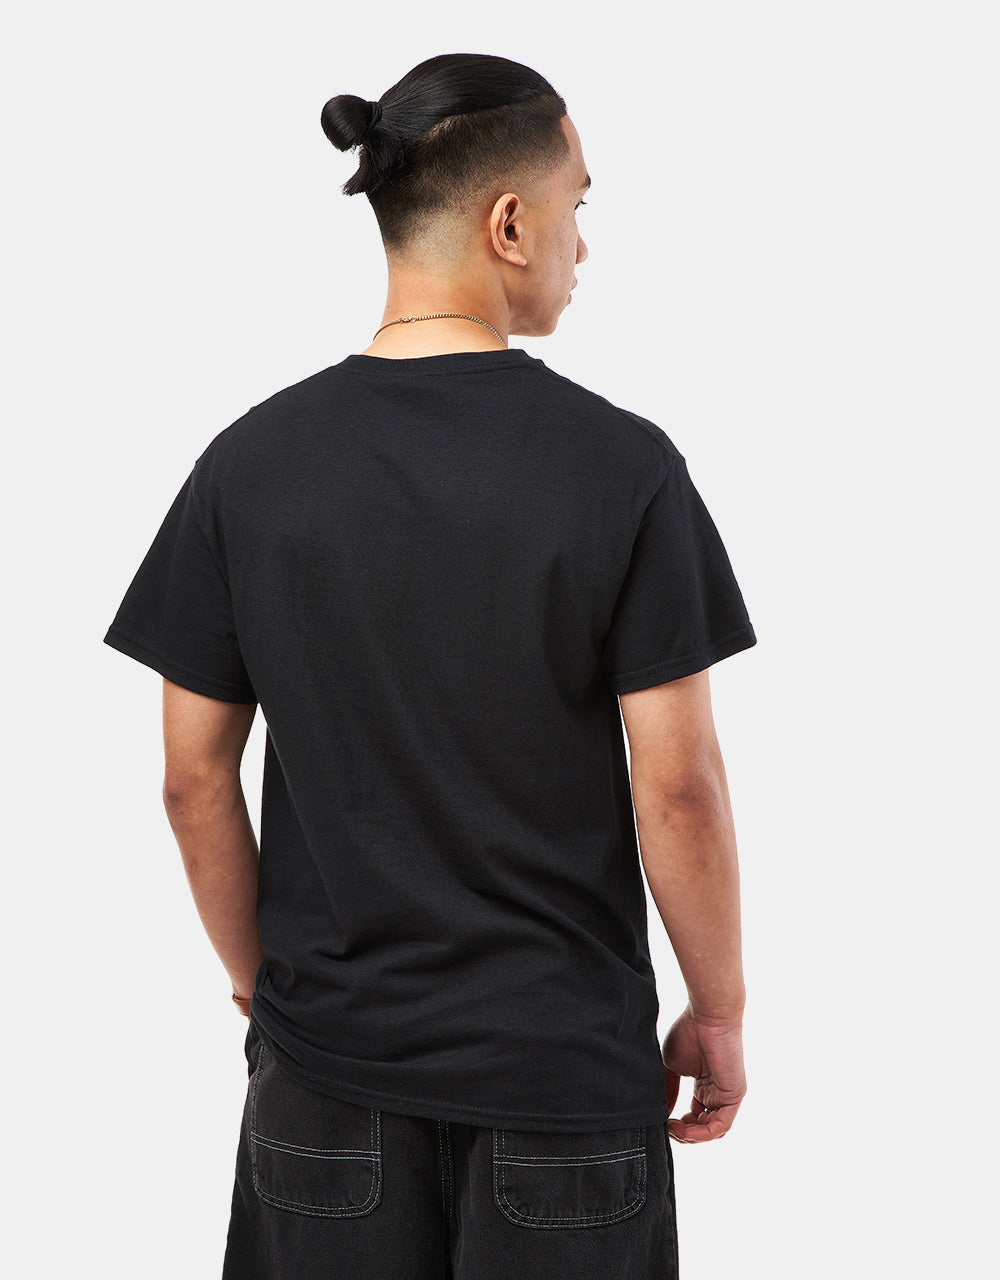 Krooked Style T-Shirt - Black/Multi